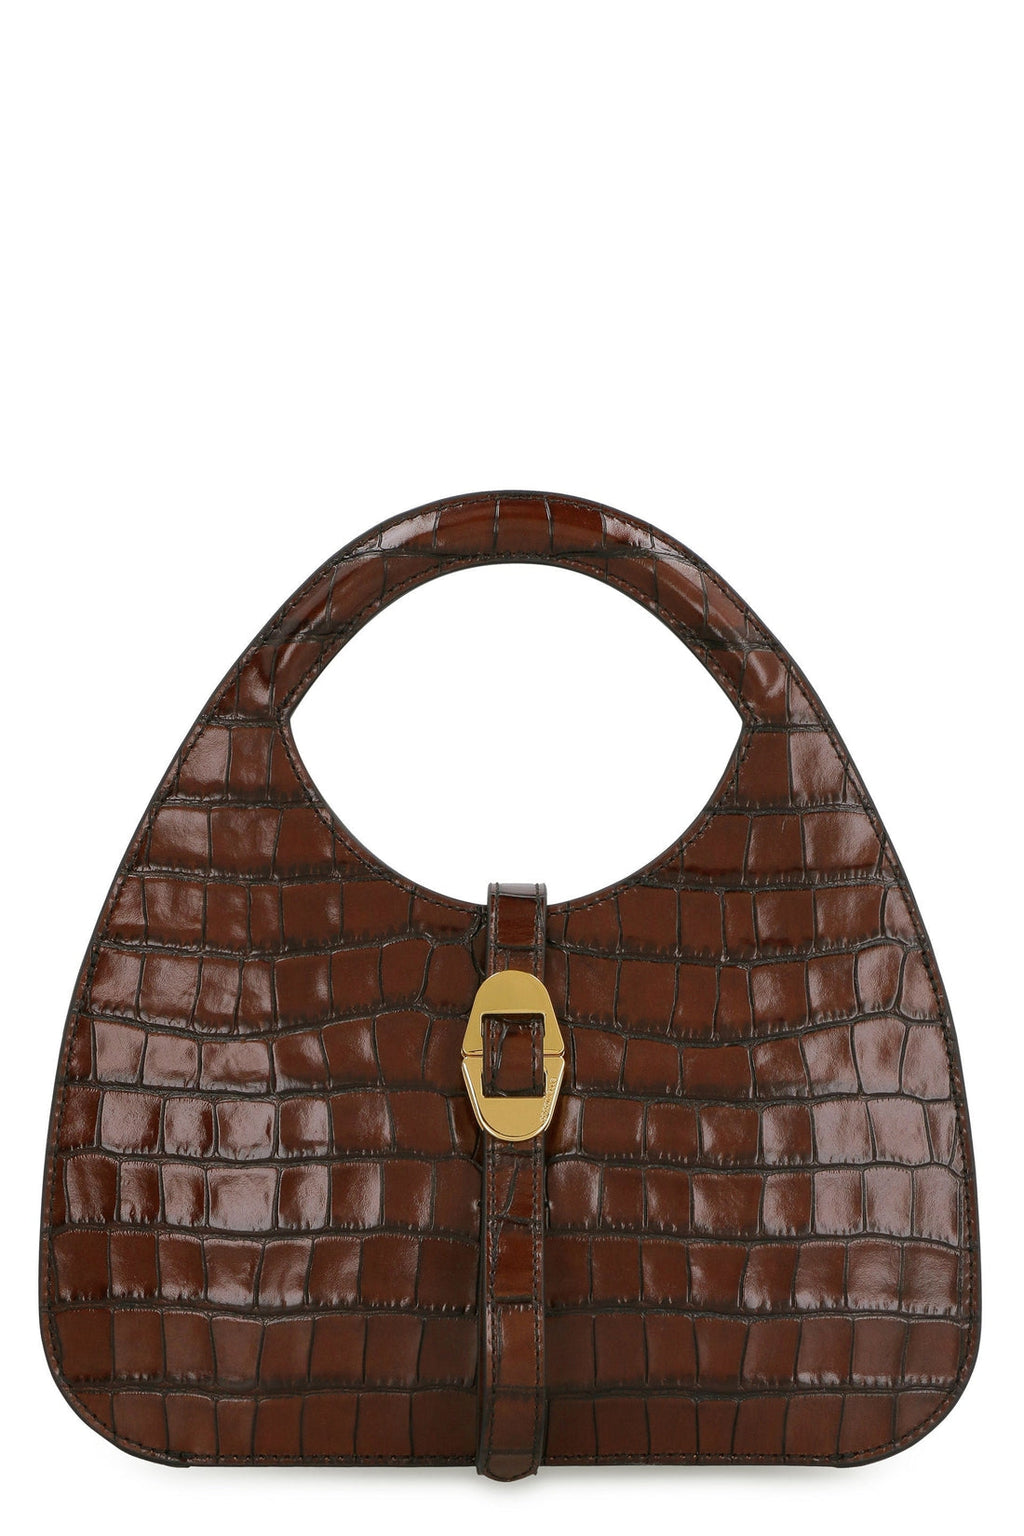 Coccinelle-OUTLET-SALE-Cosima Croco Shiny handbag-ARCHIVIST